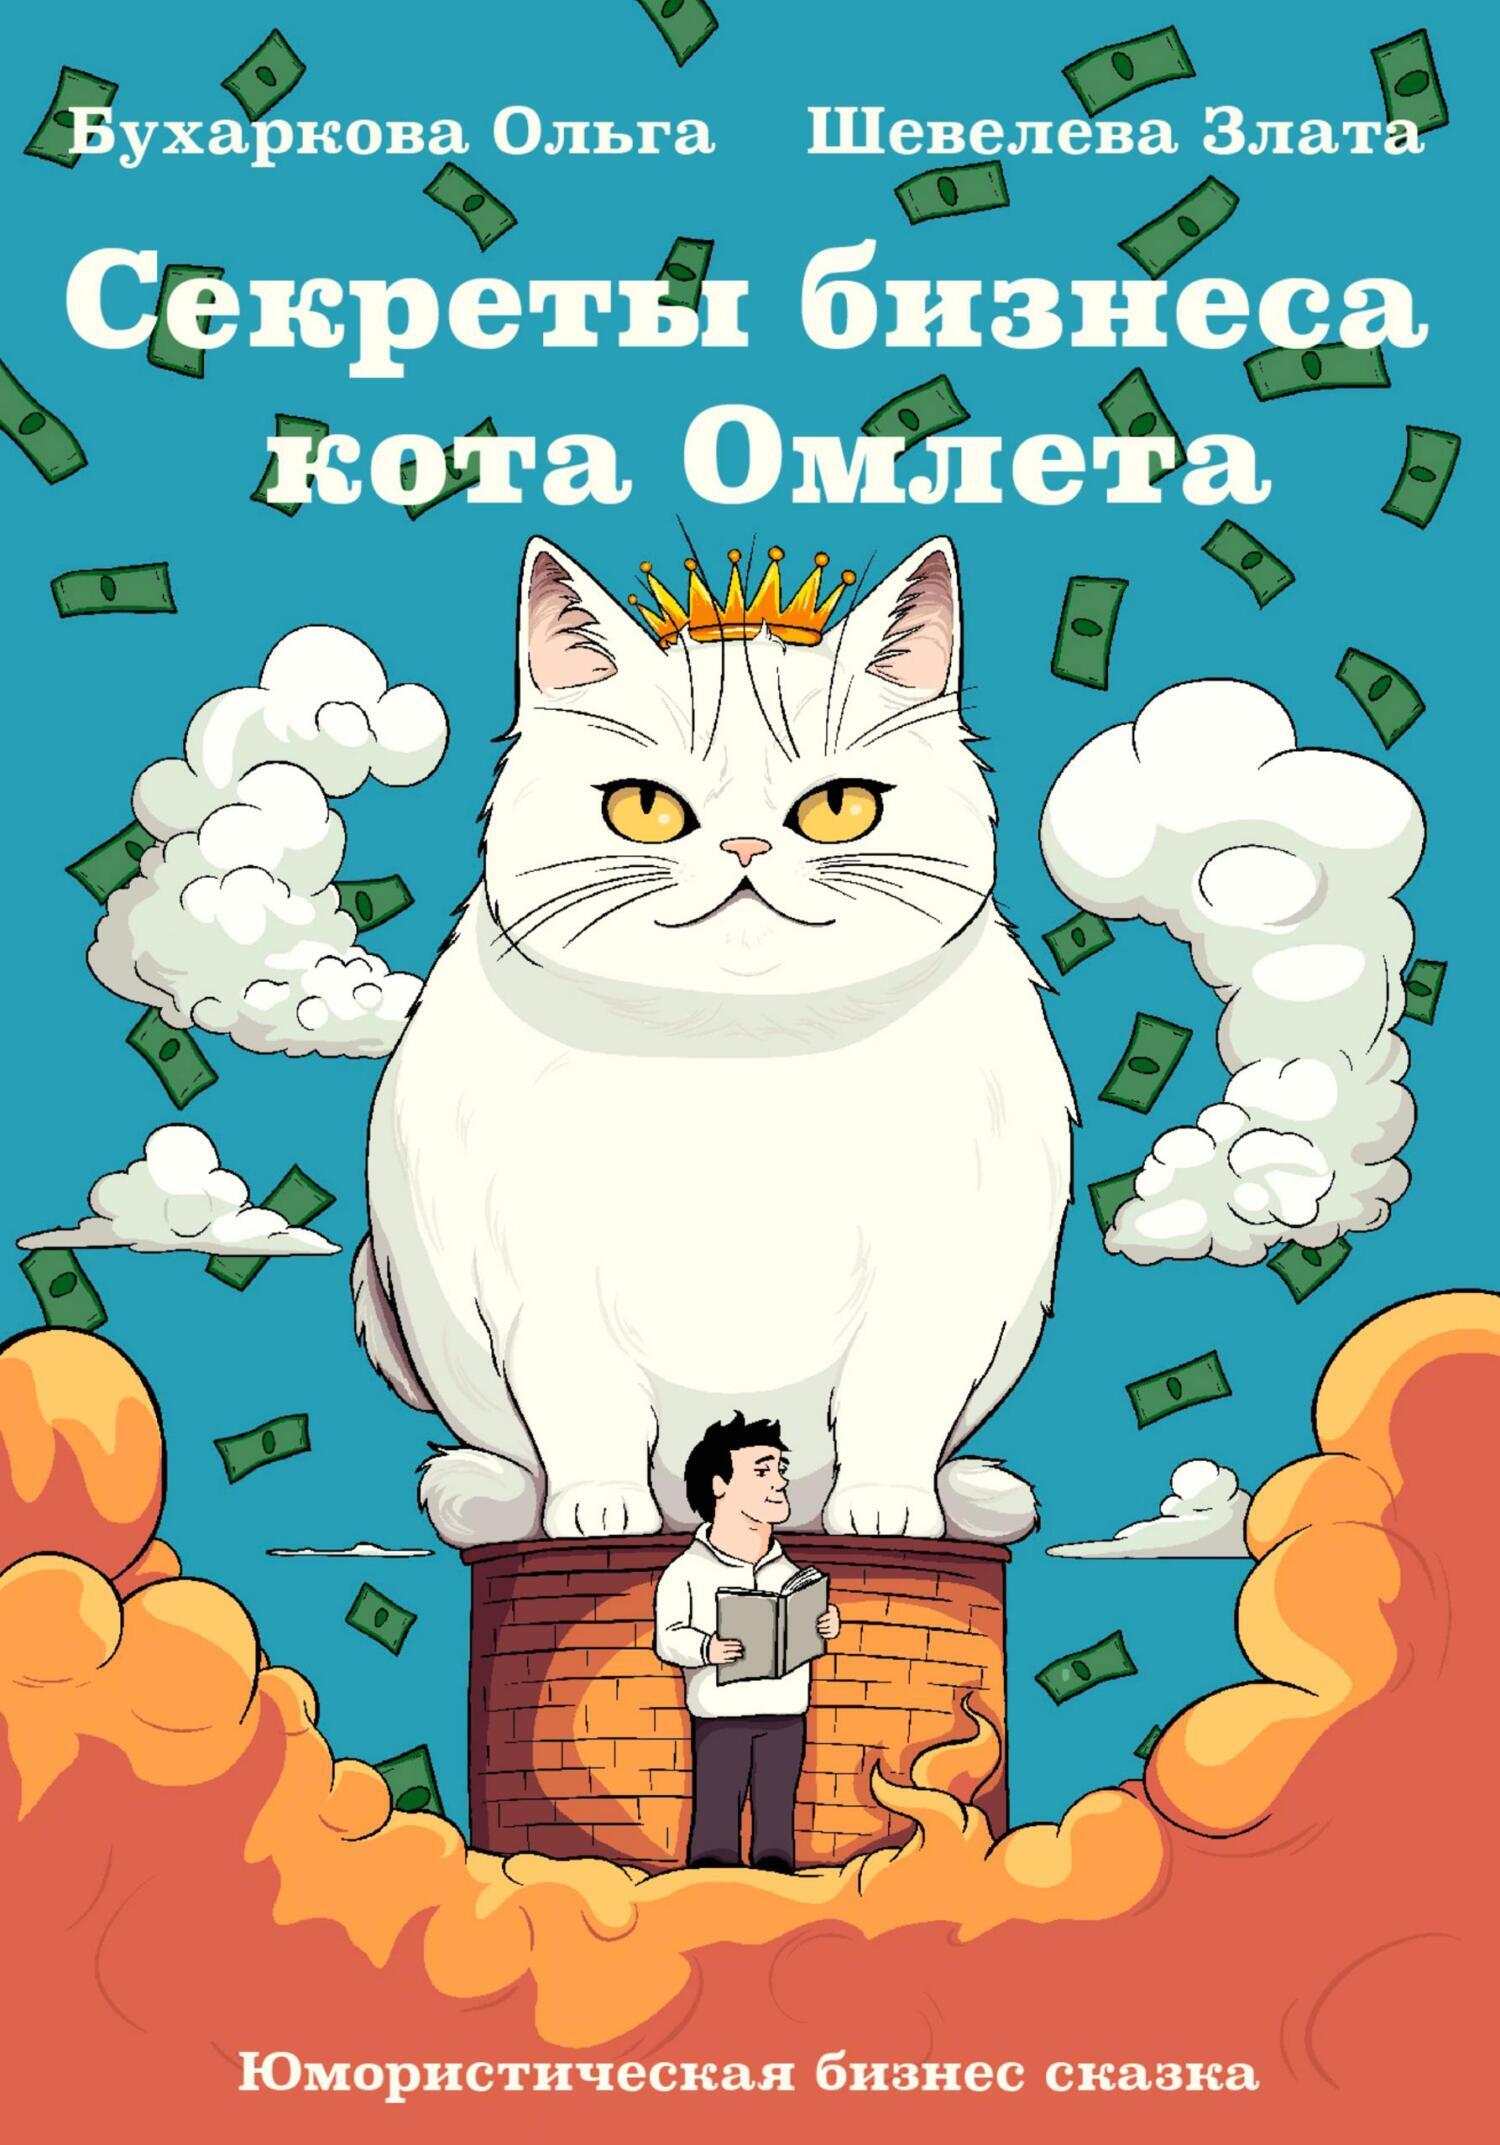 Секреты бизнеса кота Омлета, Ольга Бухаркова – скачать книгу fb2, epub, pdf  на ЛитРес